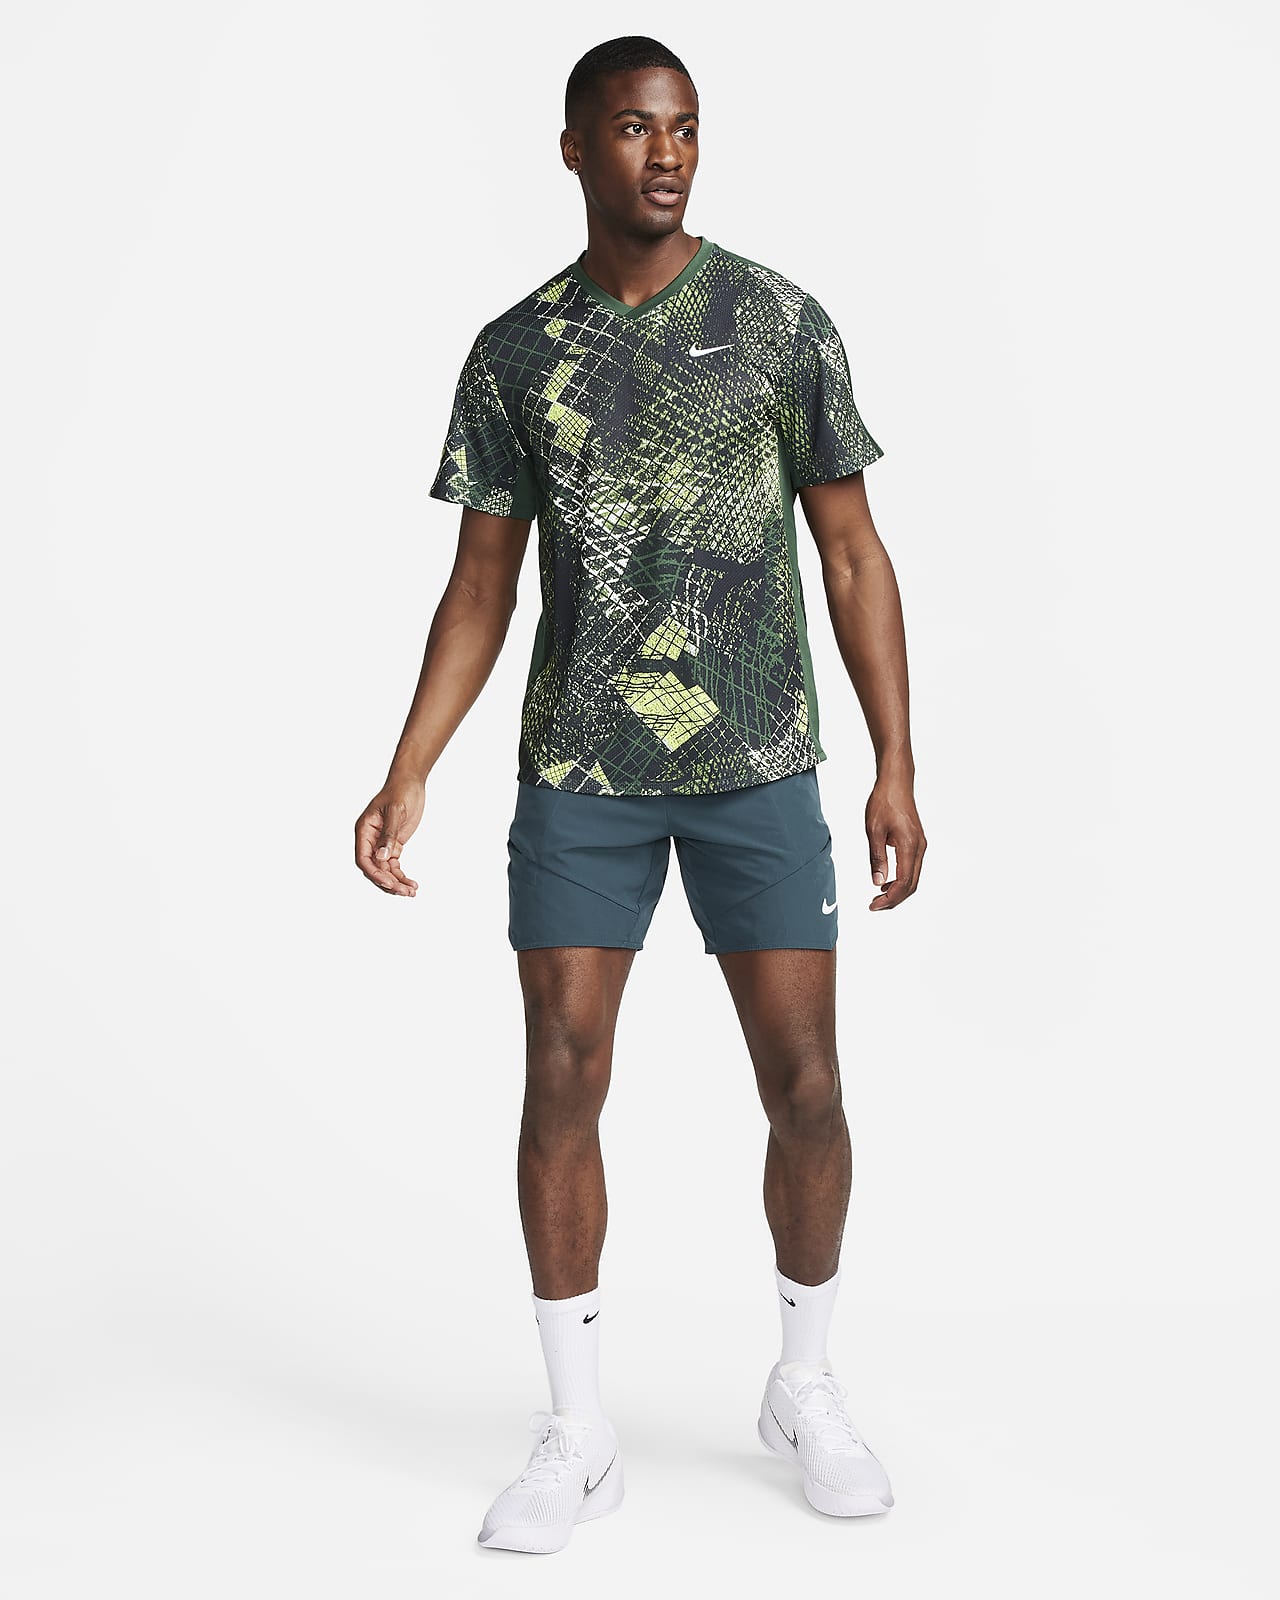 Buy Nike Dri-Fit Victory 7in Shorts Men Black online